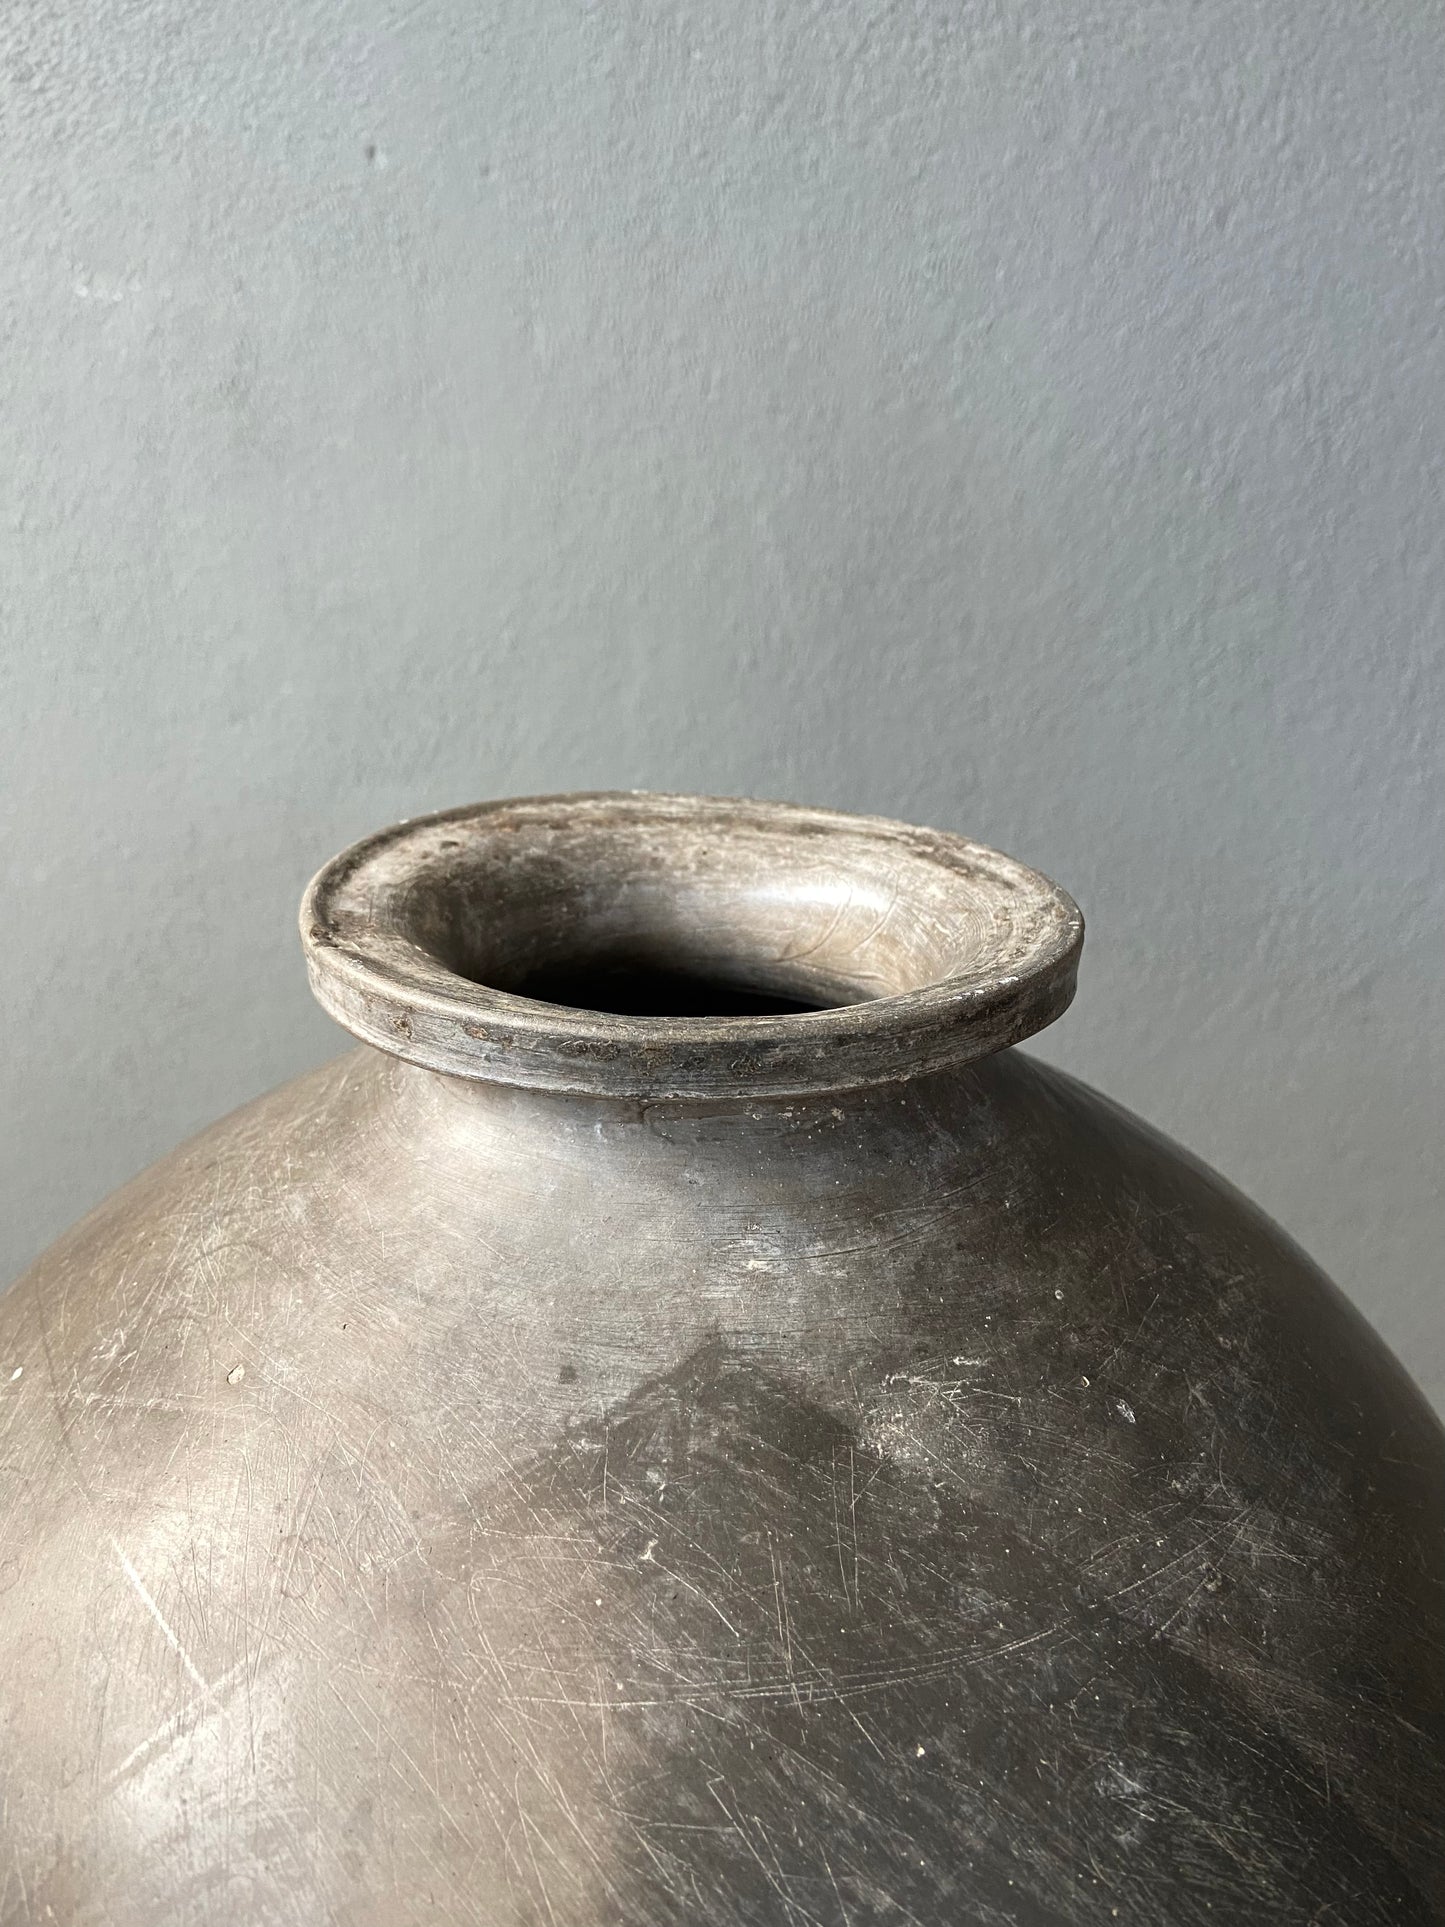 Mezcal jug from Oaxaca